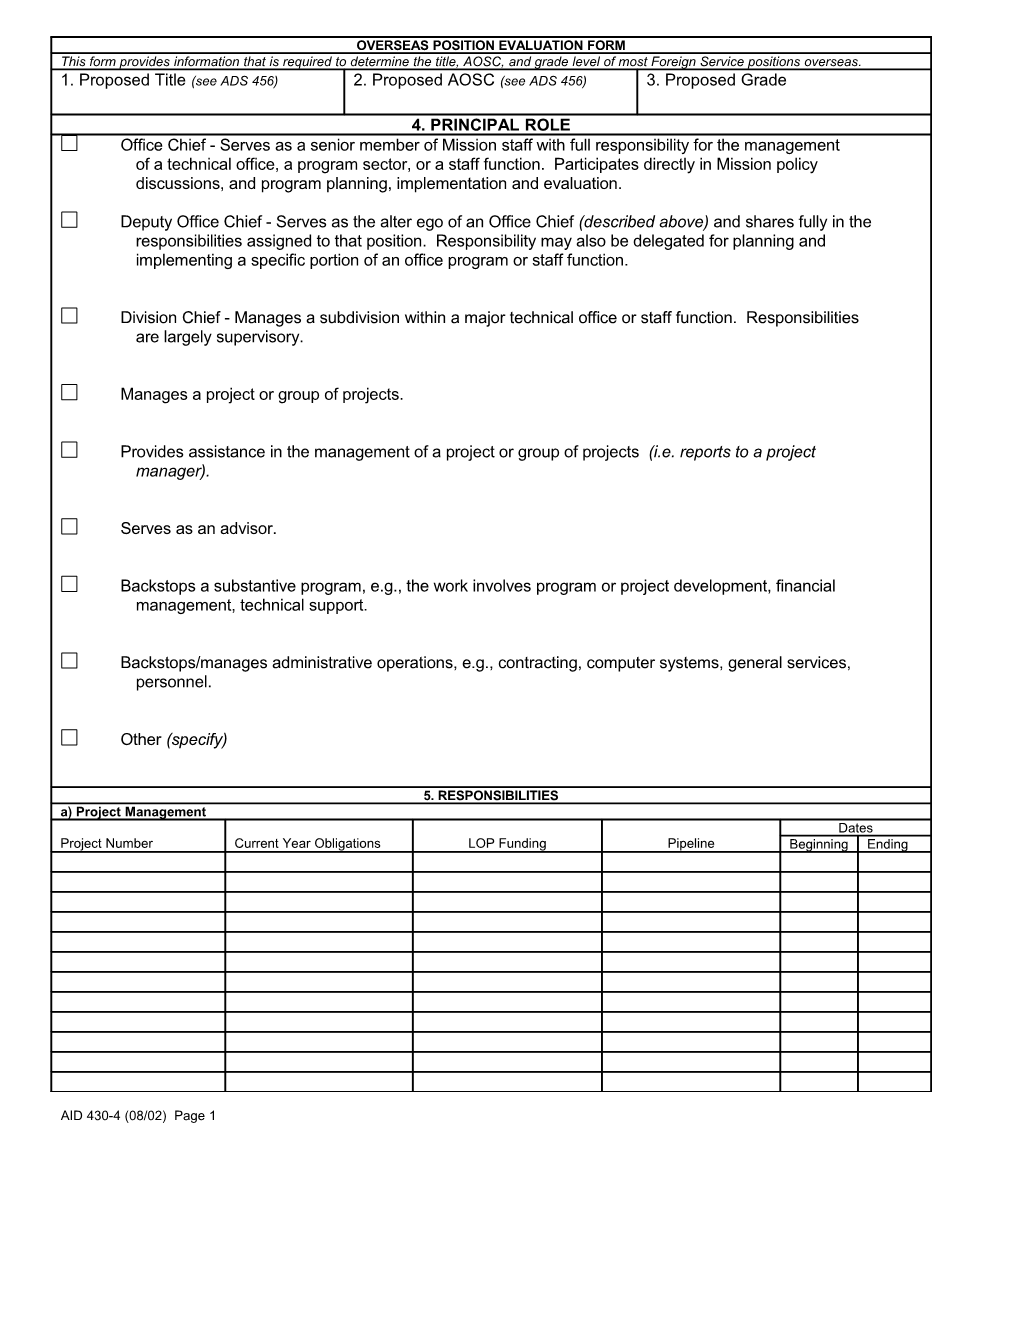 Overseas Position Evaluation Form